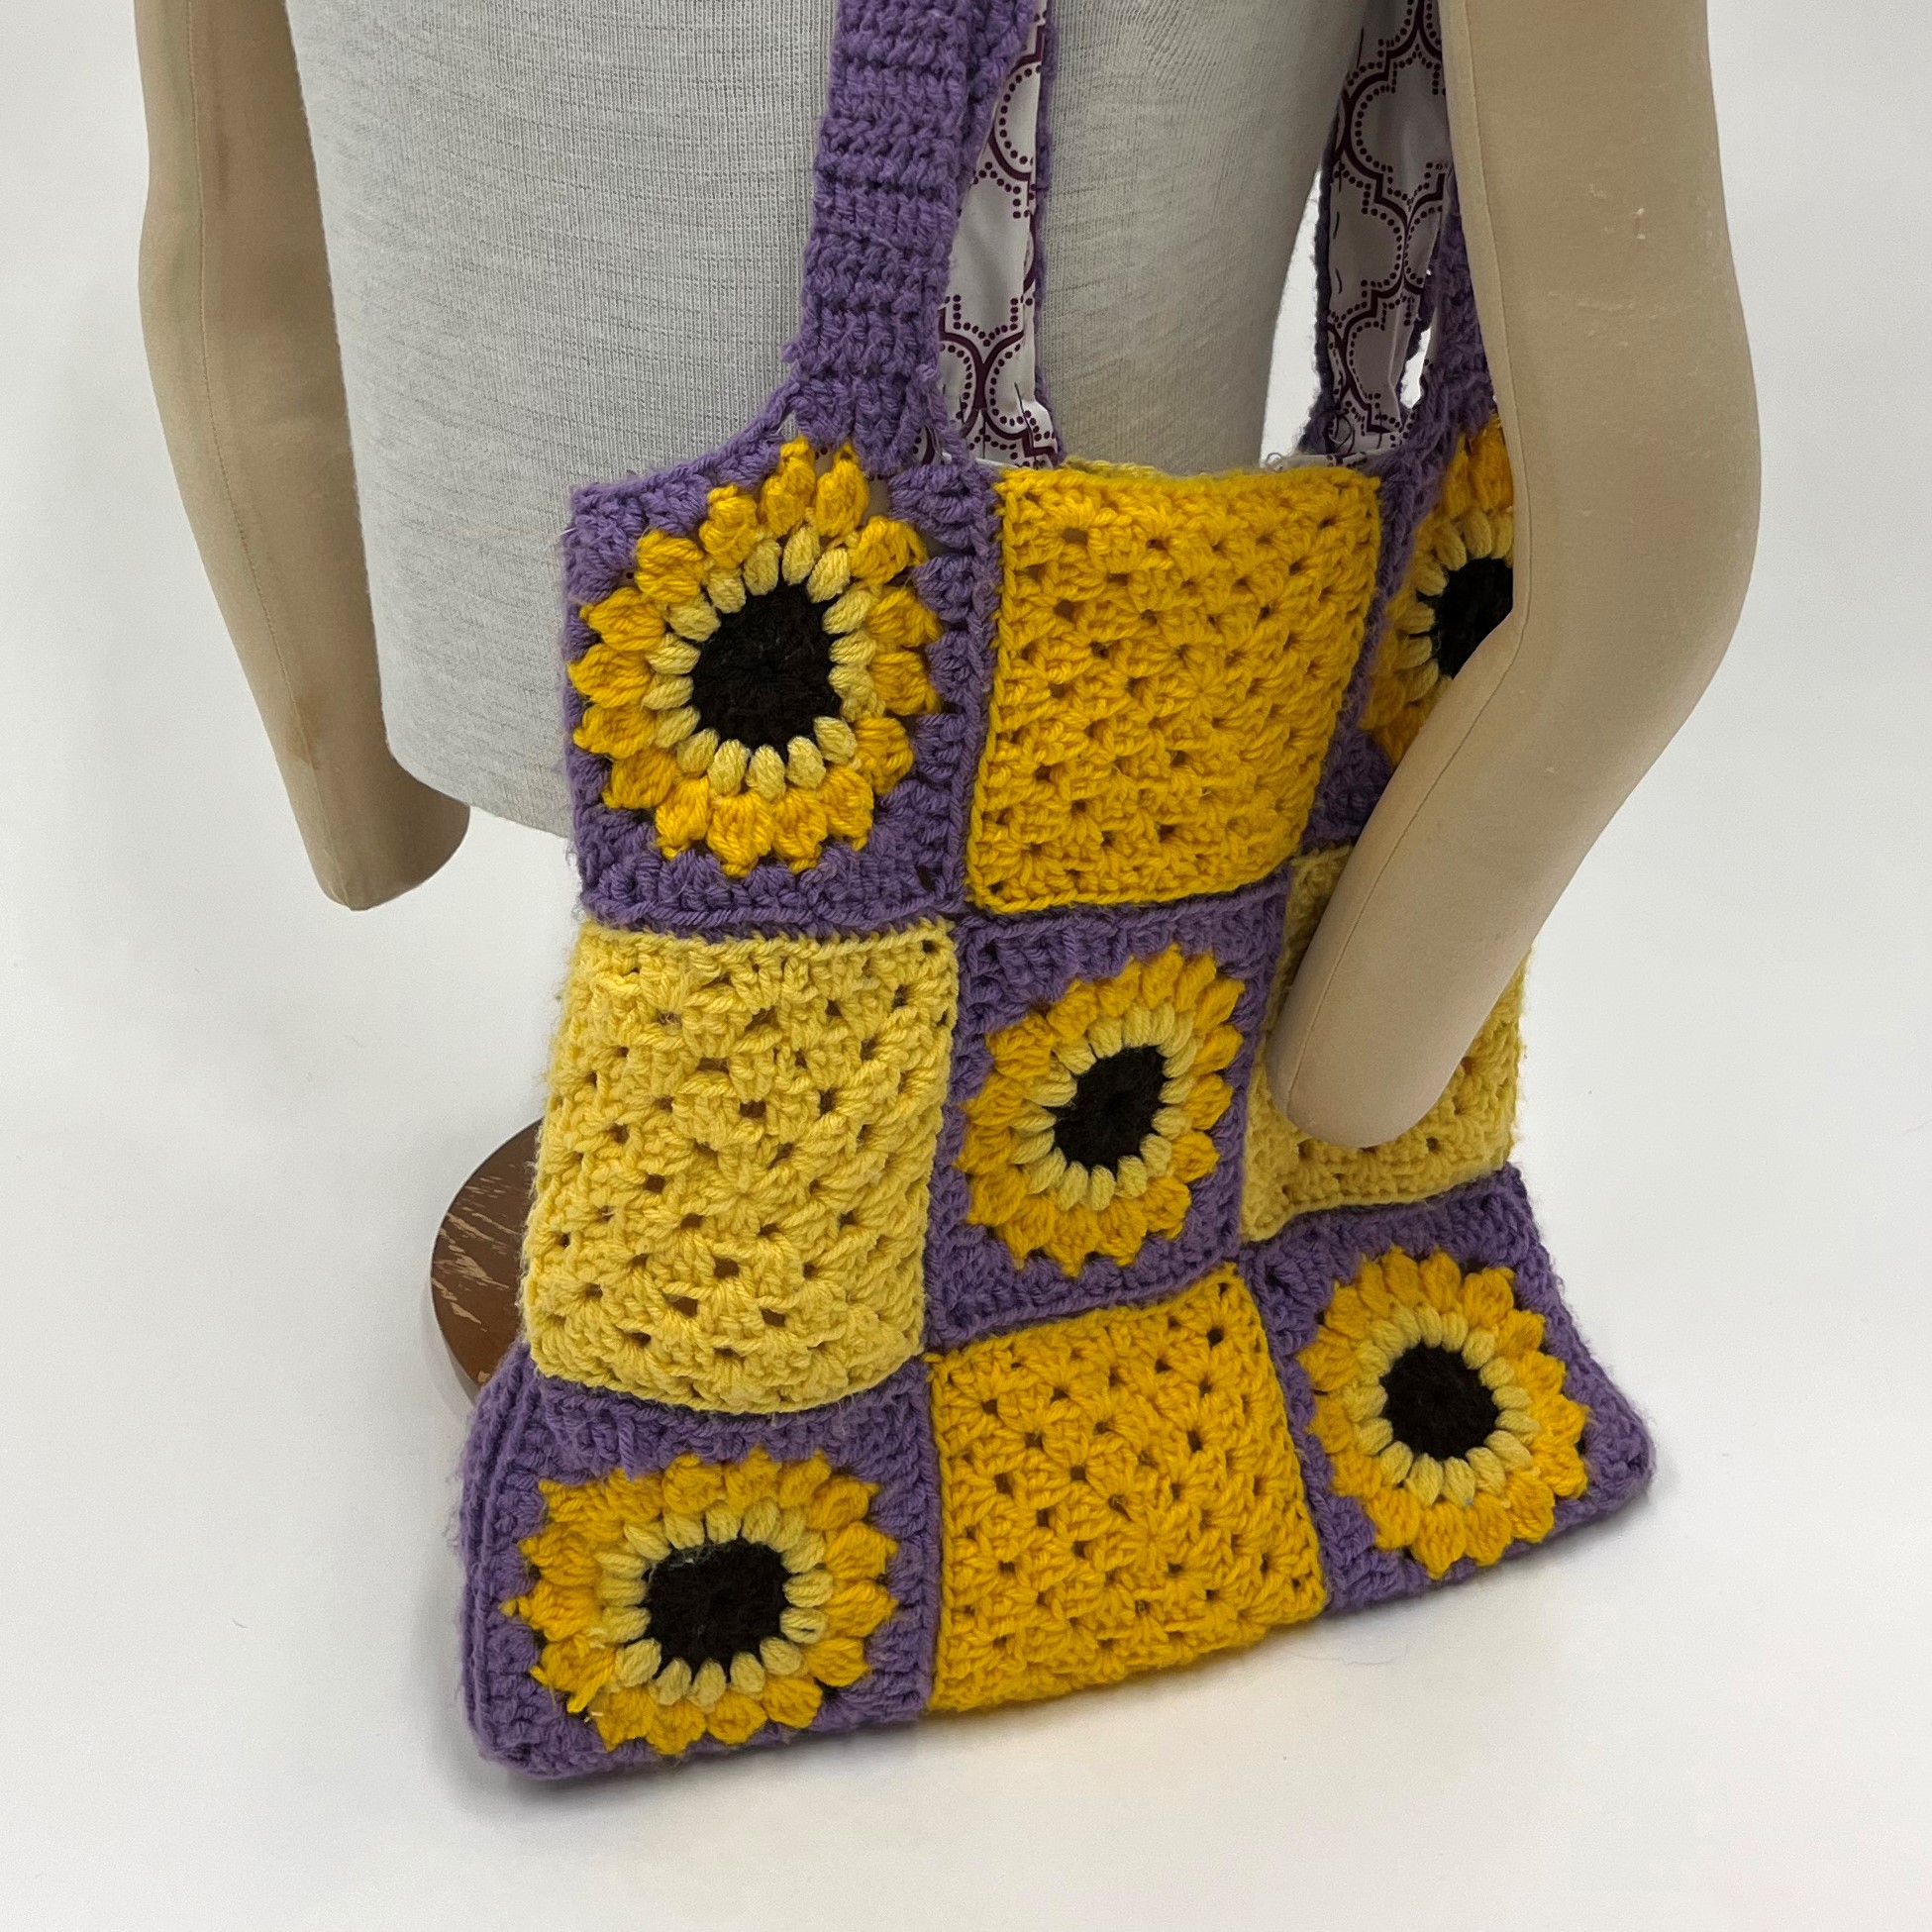 Continuing Crochet: Granny Squares